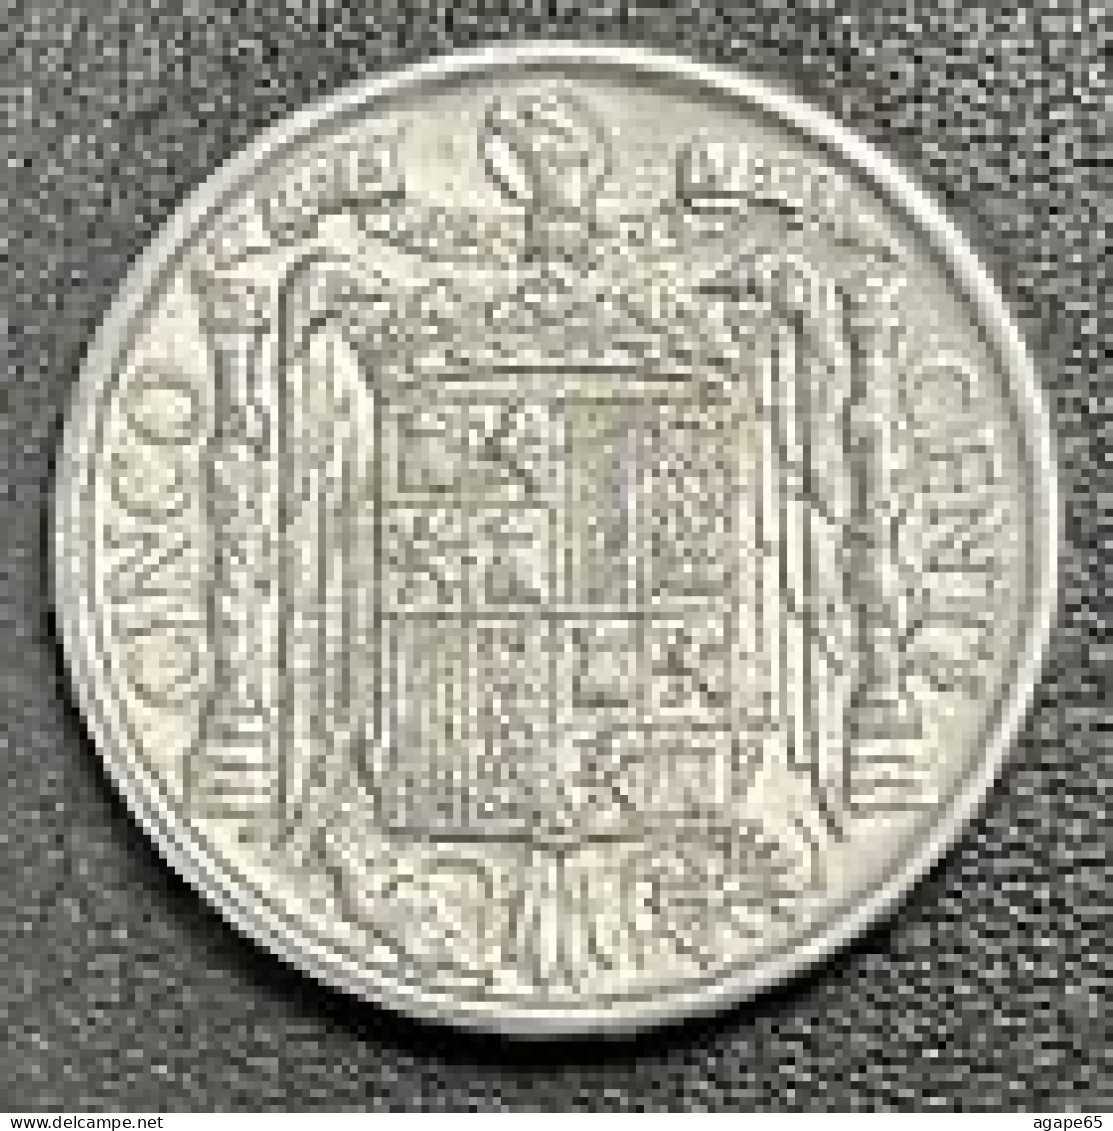 5 Centimos, Spain, 1945 - 5 Centimos